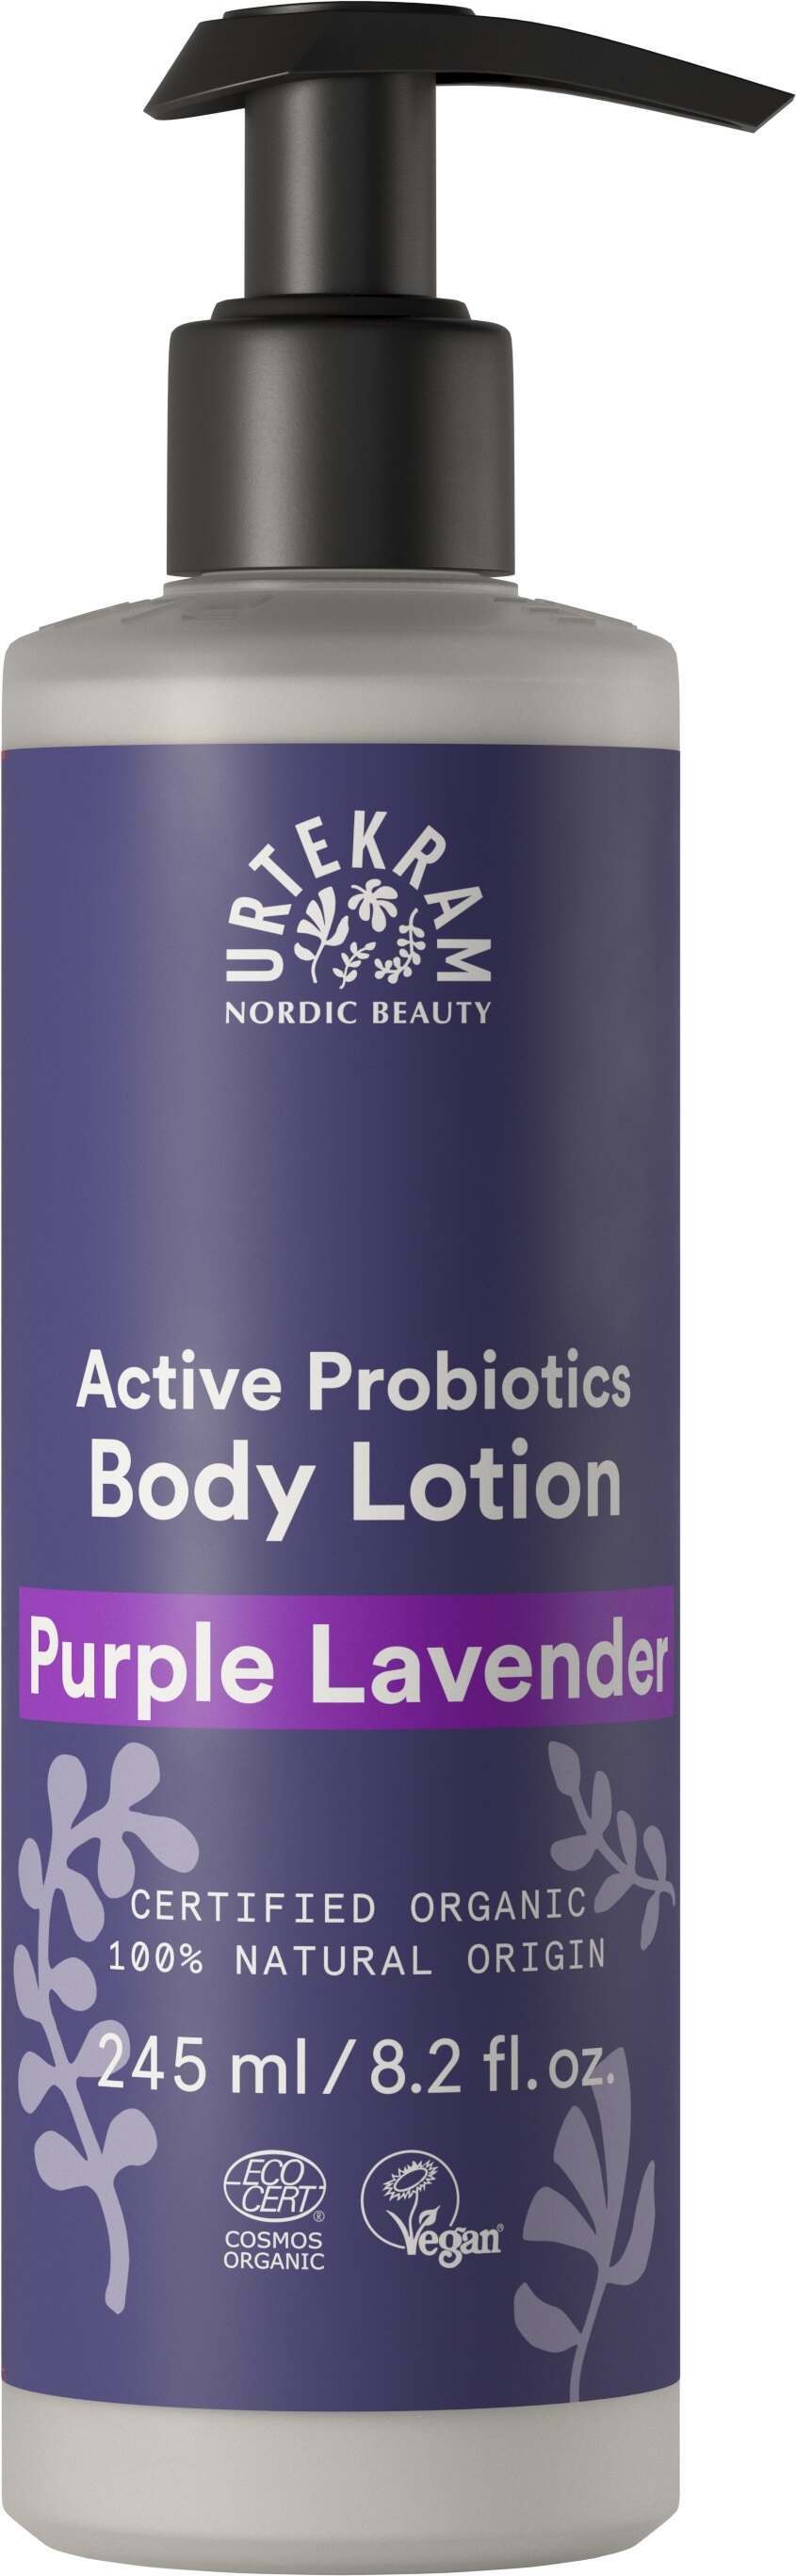 Urtekram Organic Purple Lavender Body Lotion 245ml